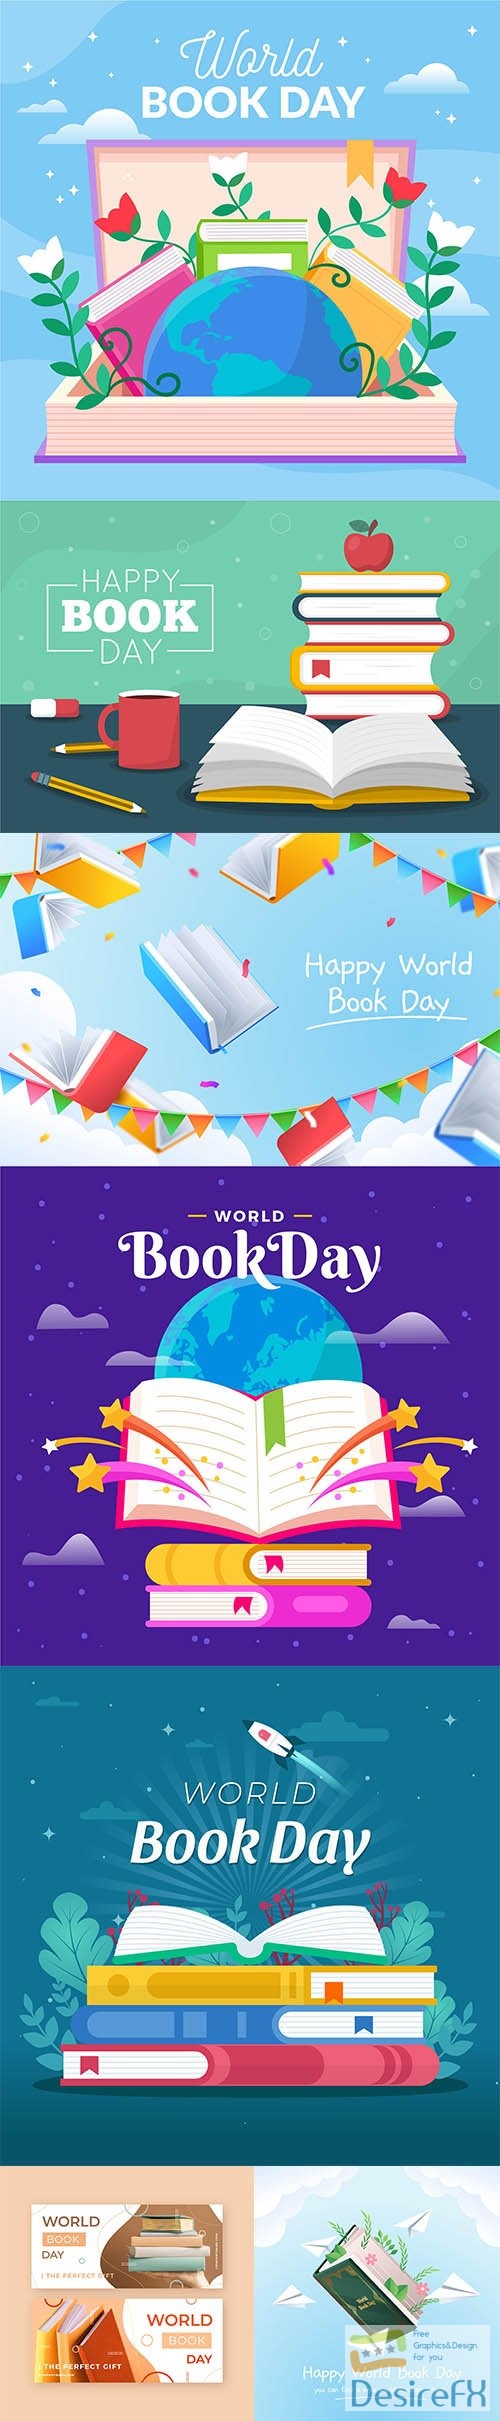 Flat world book day illustrations set